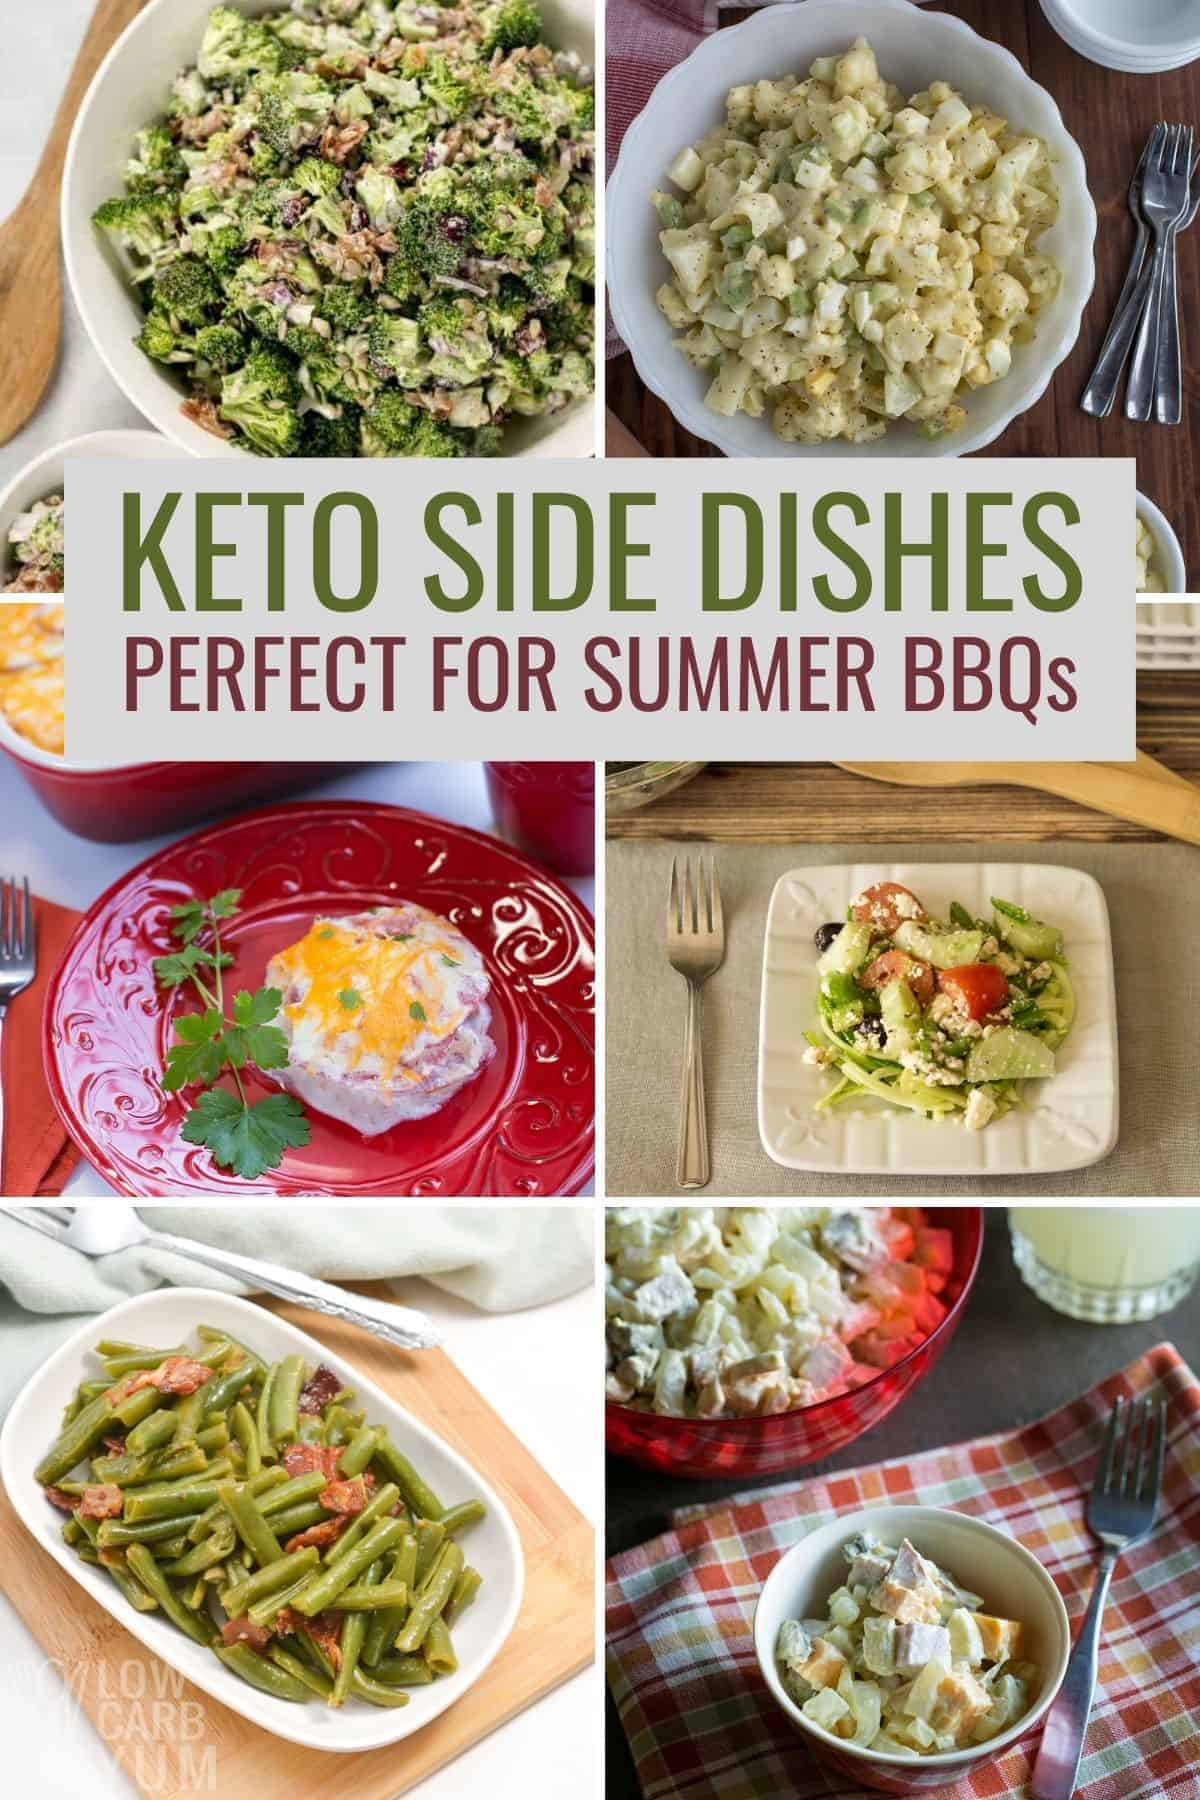 keto side dishes for summer BBQs Pinterest image.